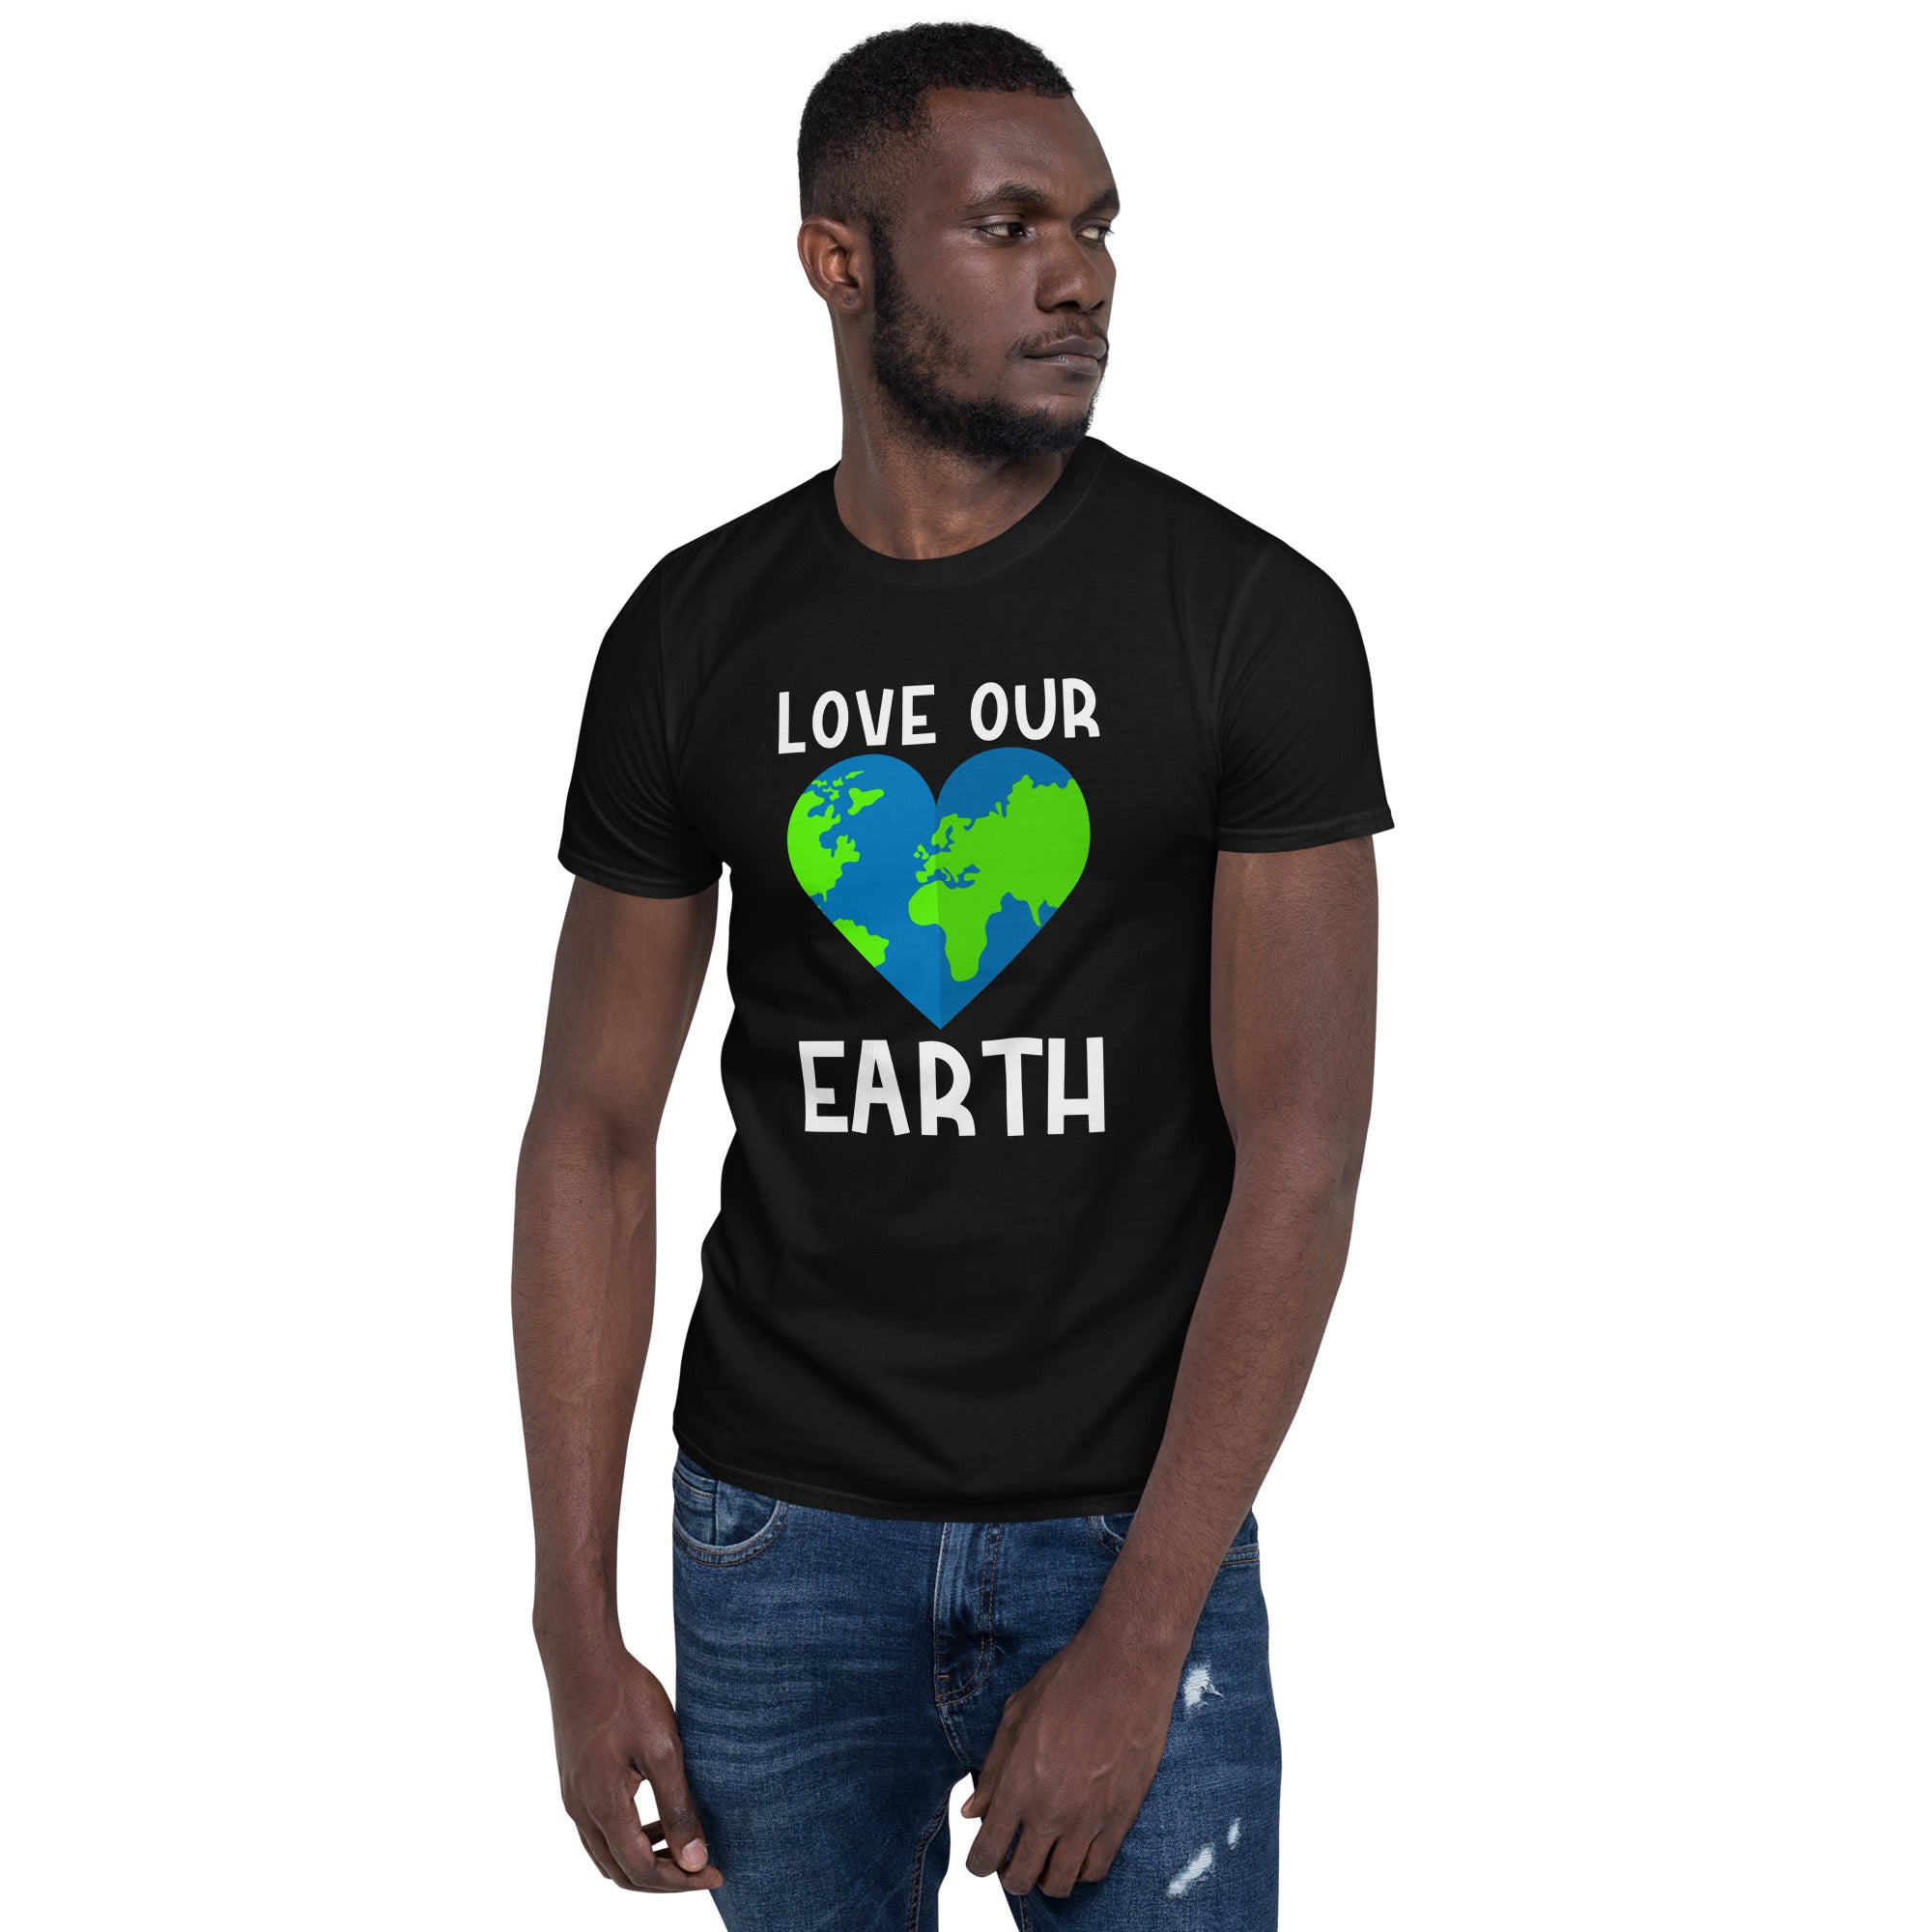 Love Our Earth - Short-Sleeve Unisex T-Shirt